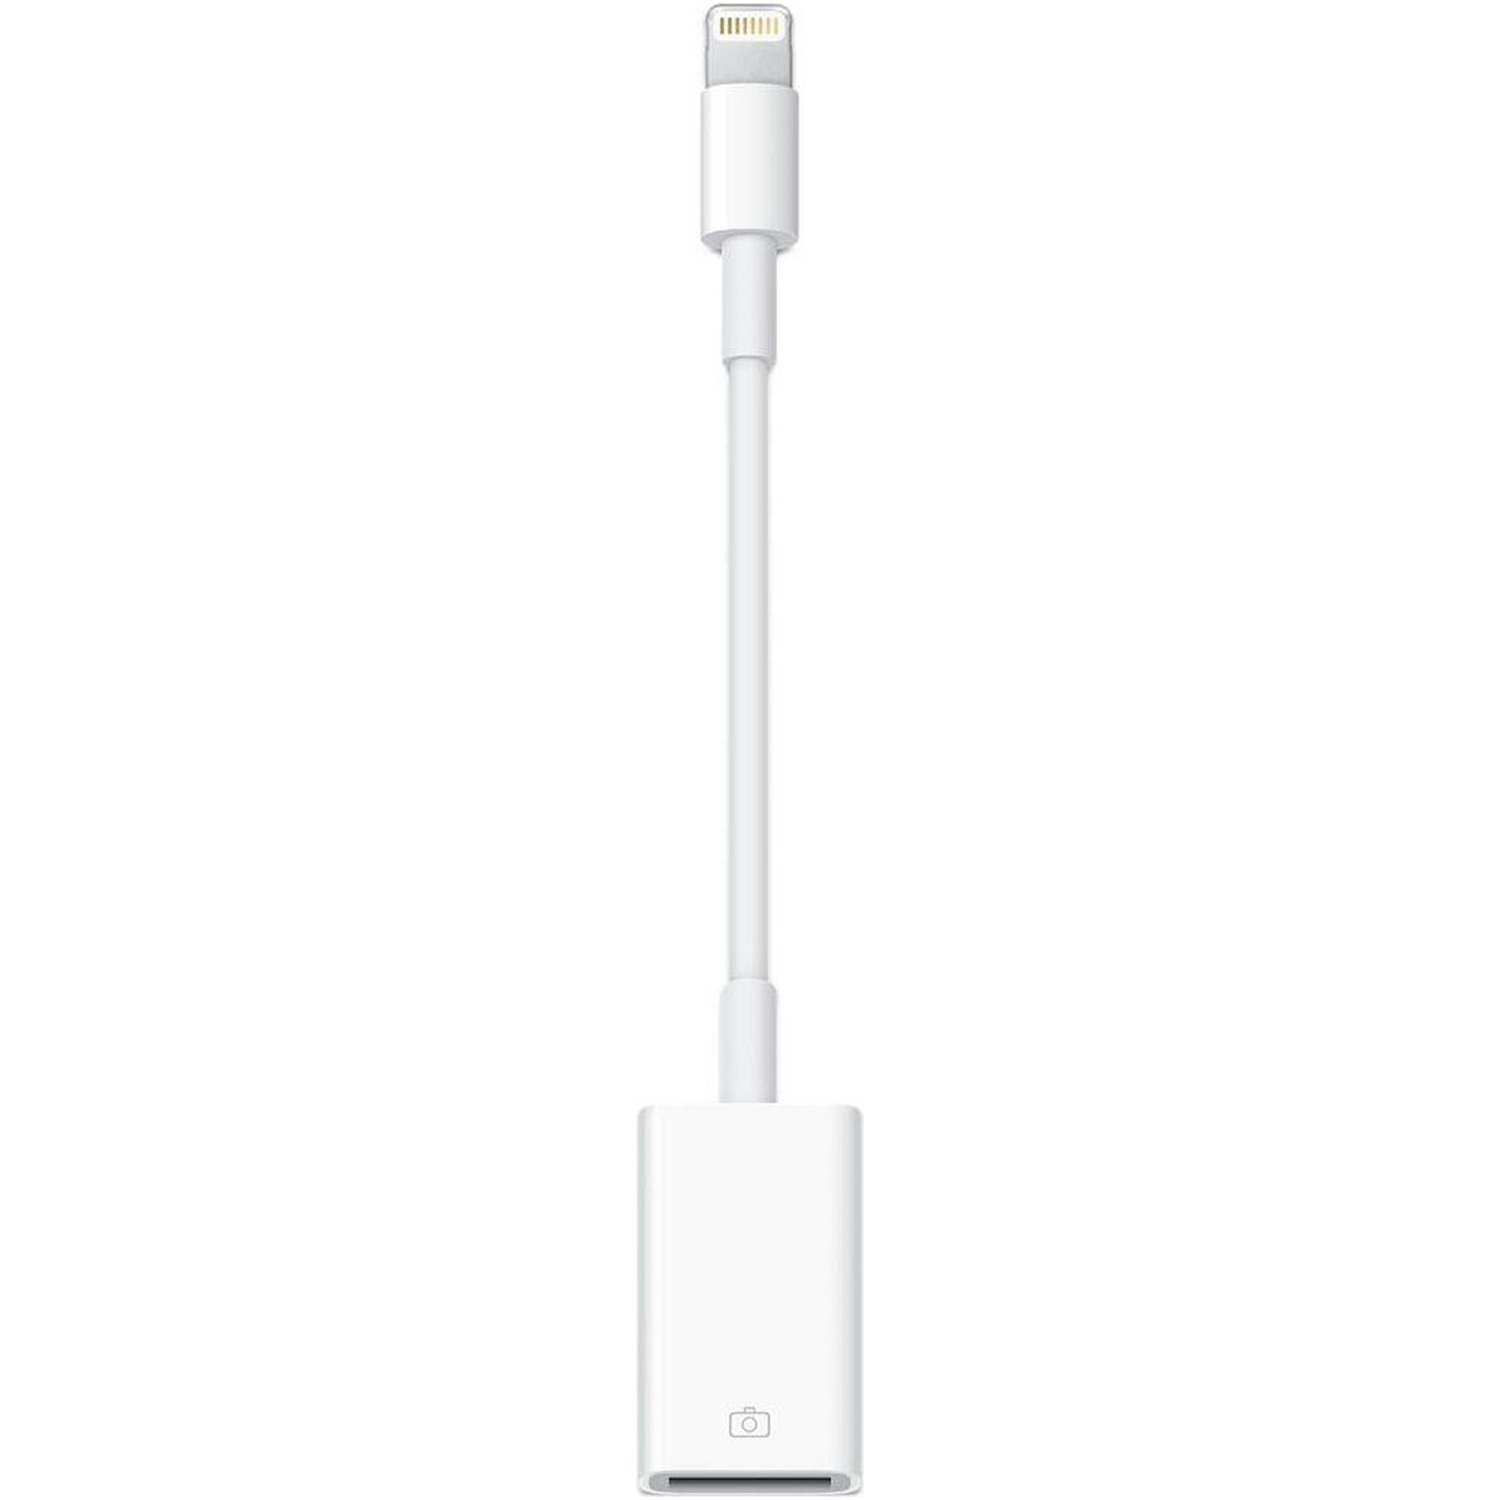 Immagine per Cavo lightning Apple a USB (femmina) camera adapter bianco da DIMOStore